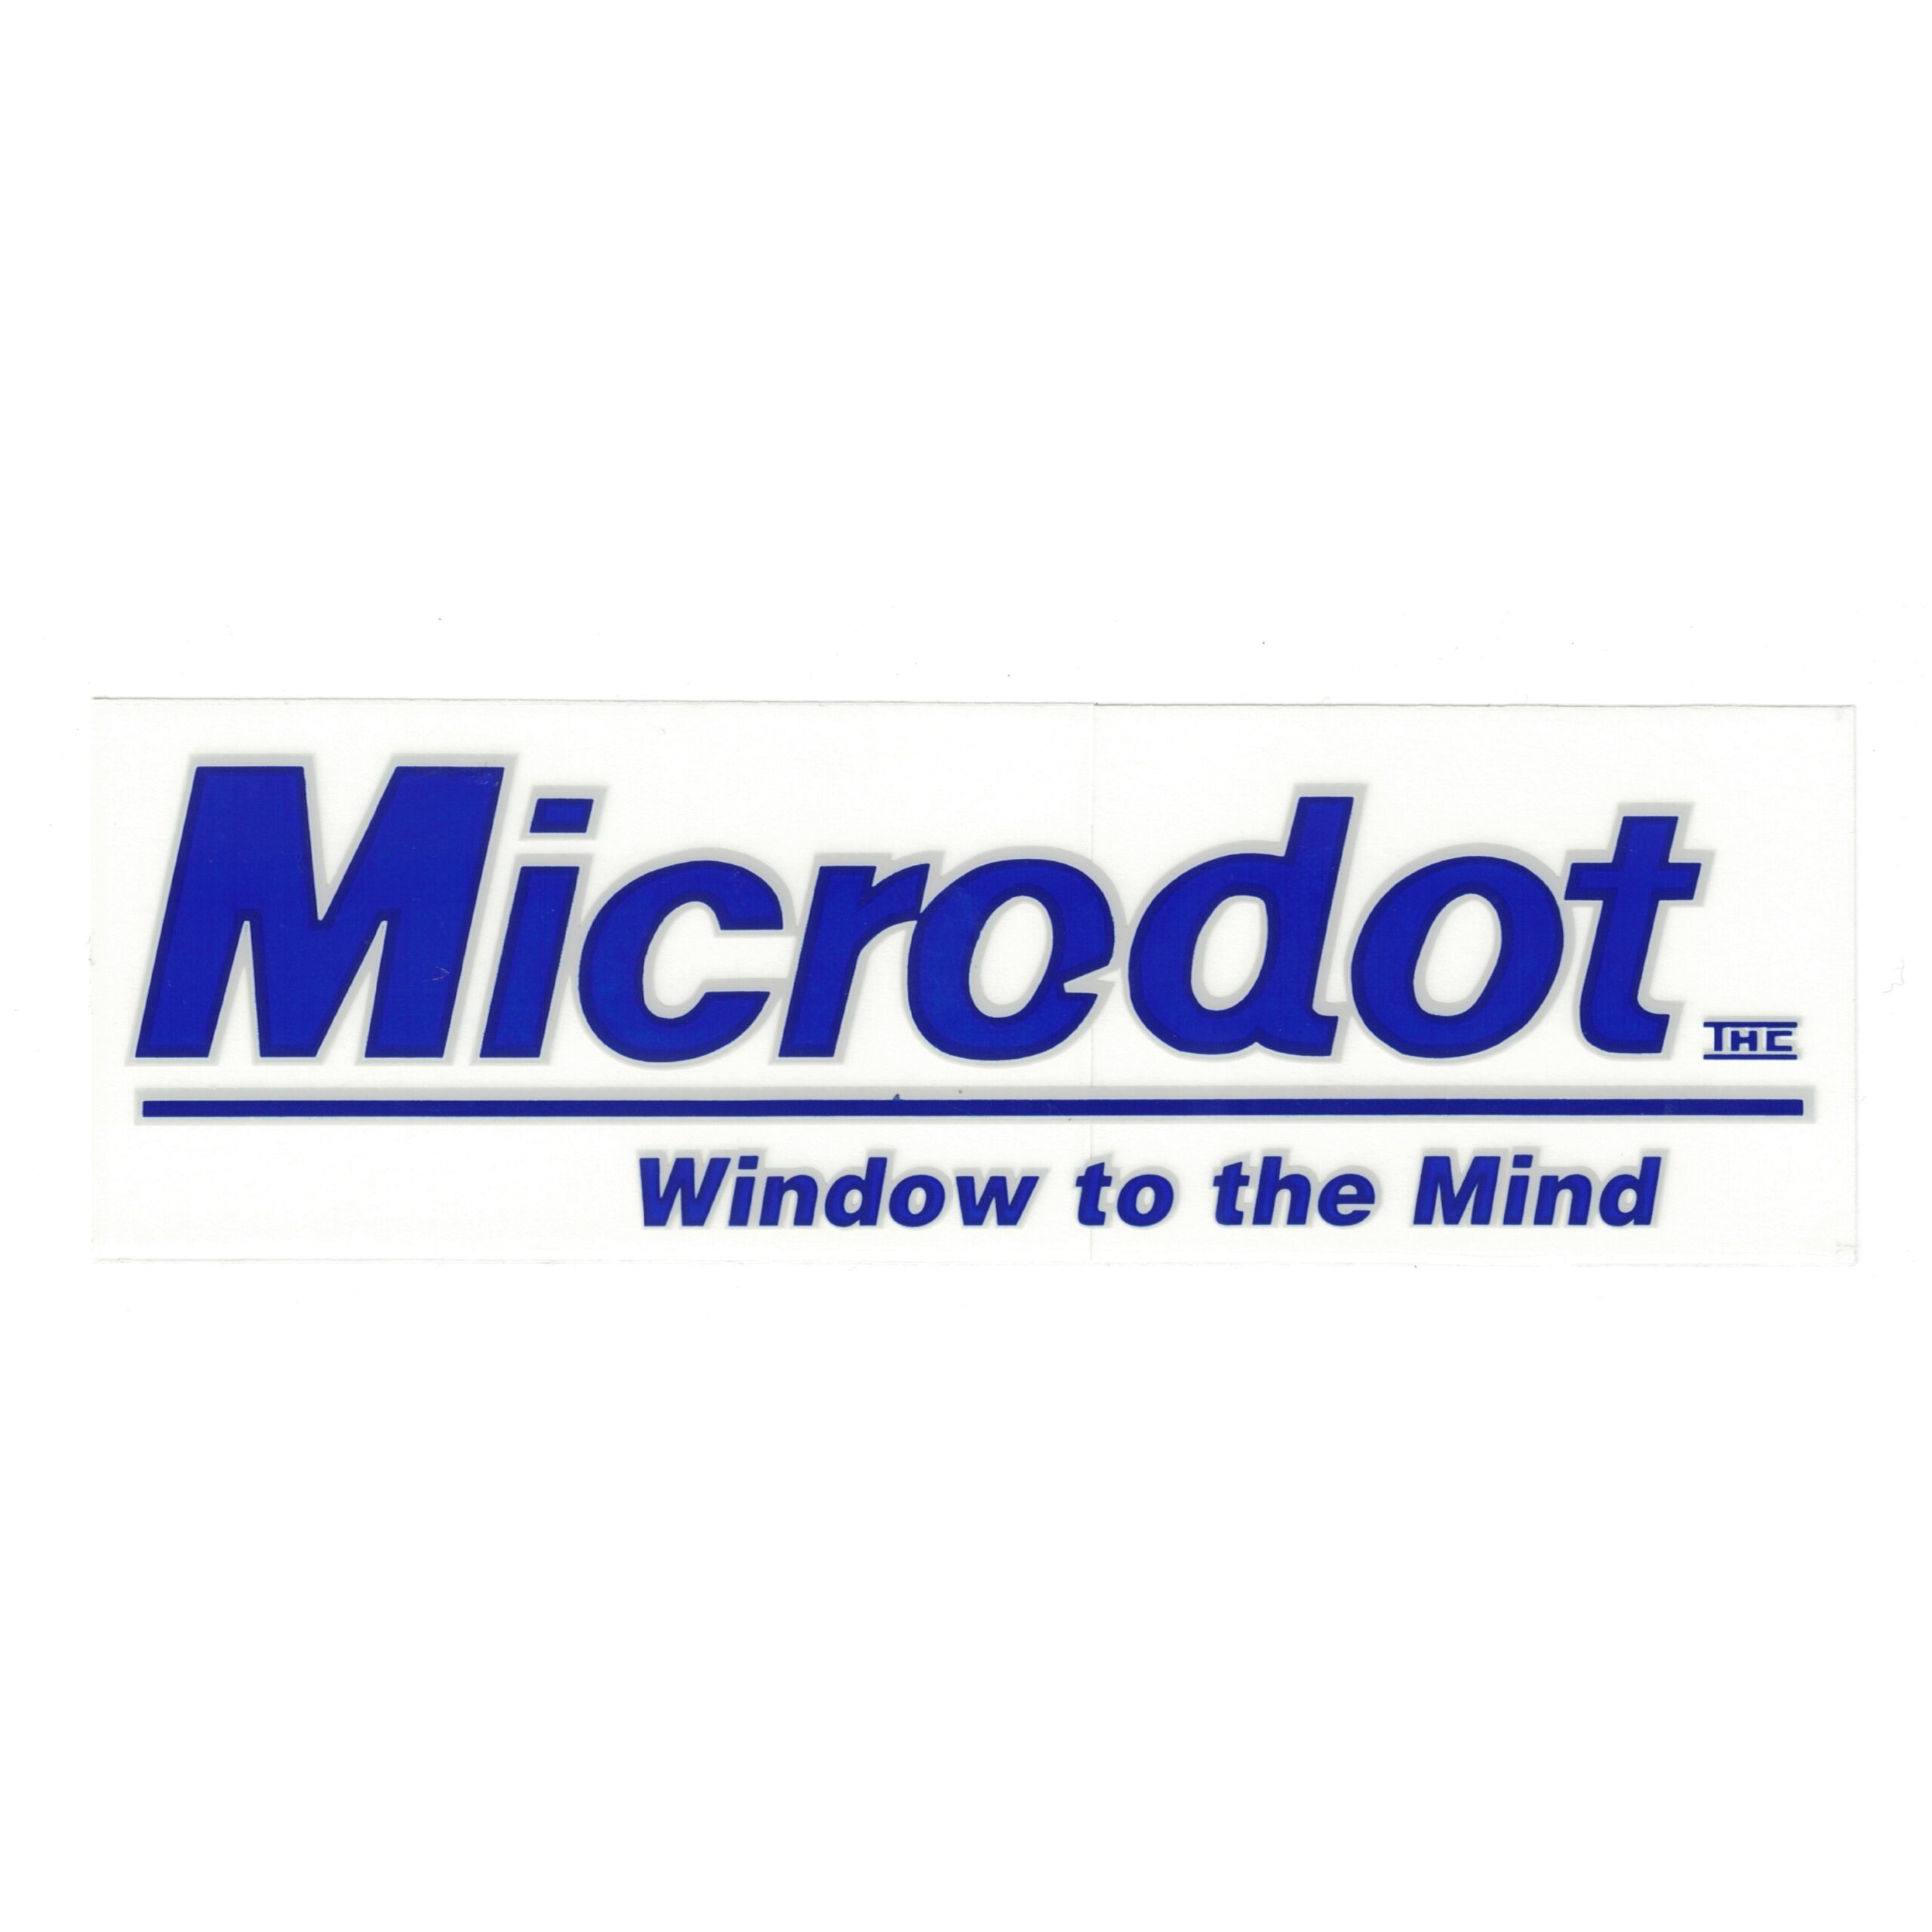 THC MS Windows Microdot Window to the Mind